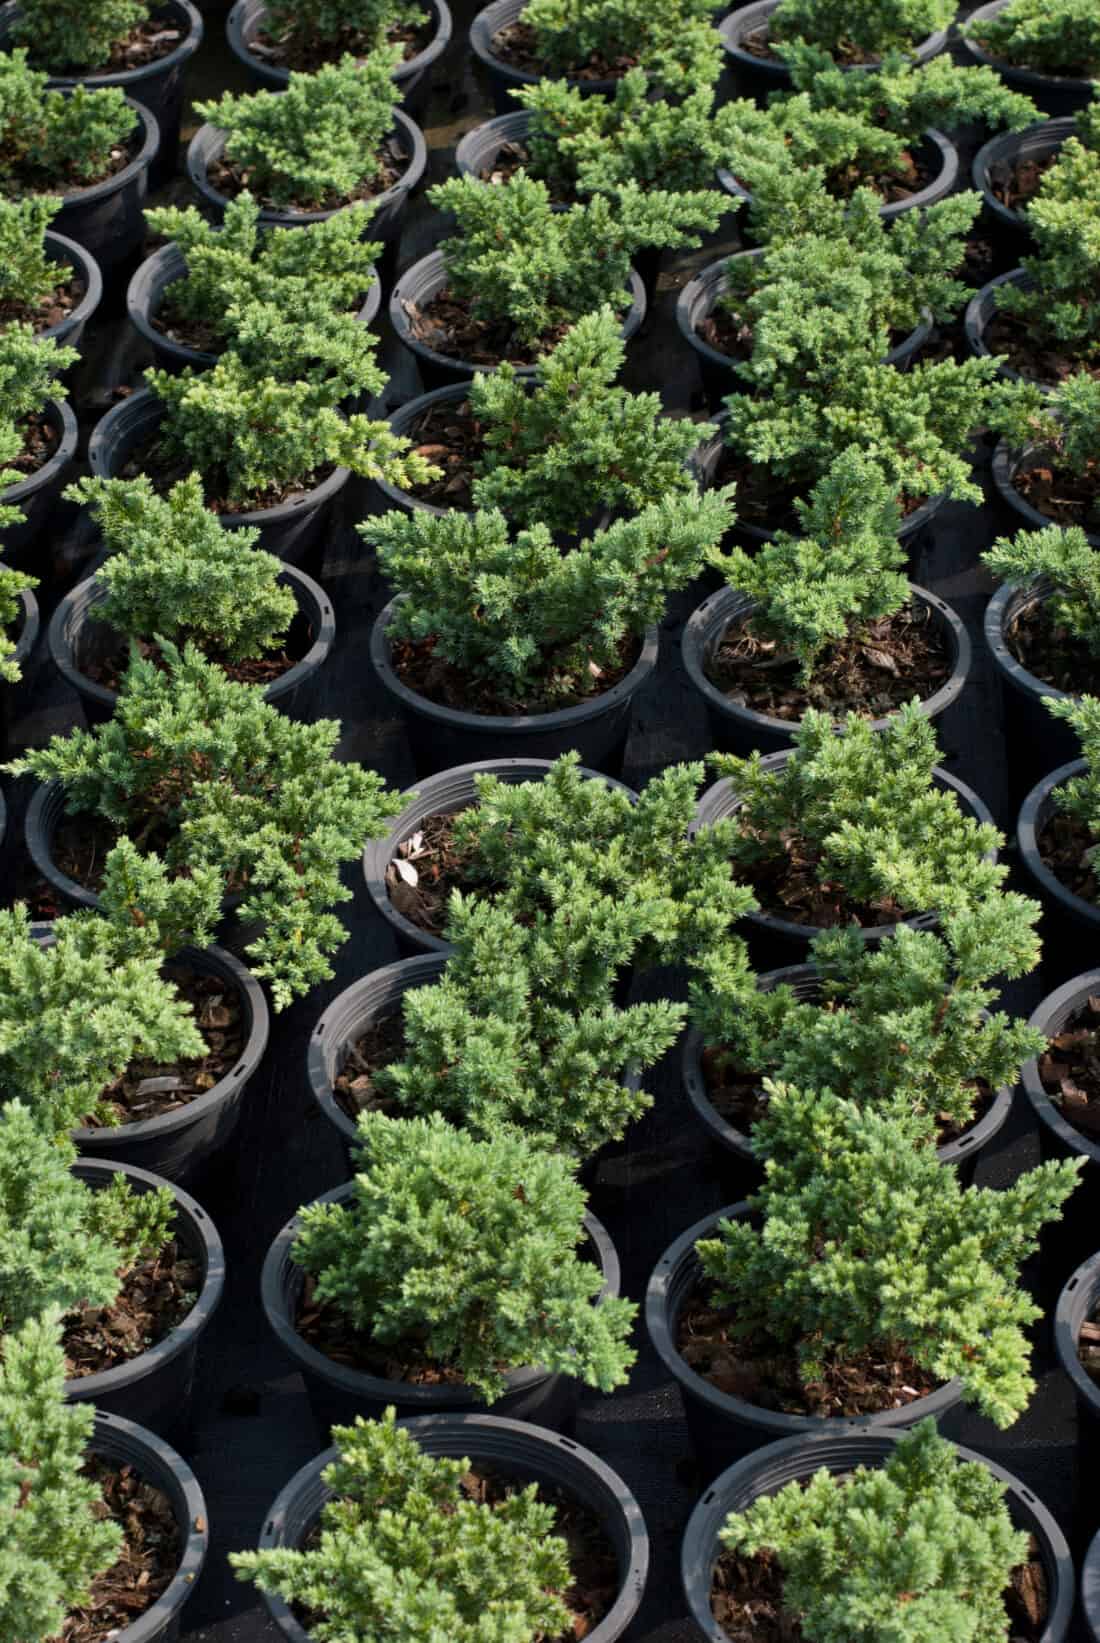 Evergreen juniper trees in pots.